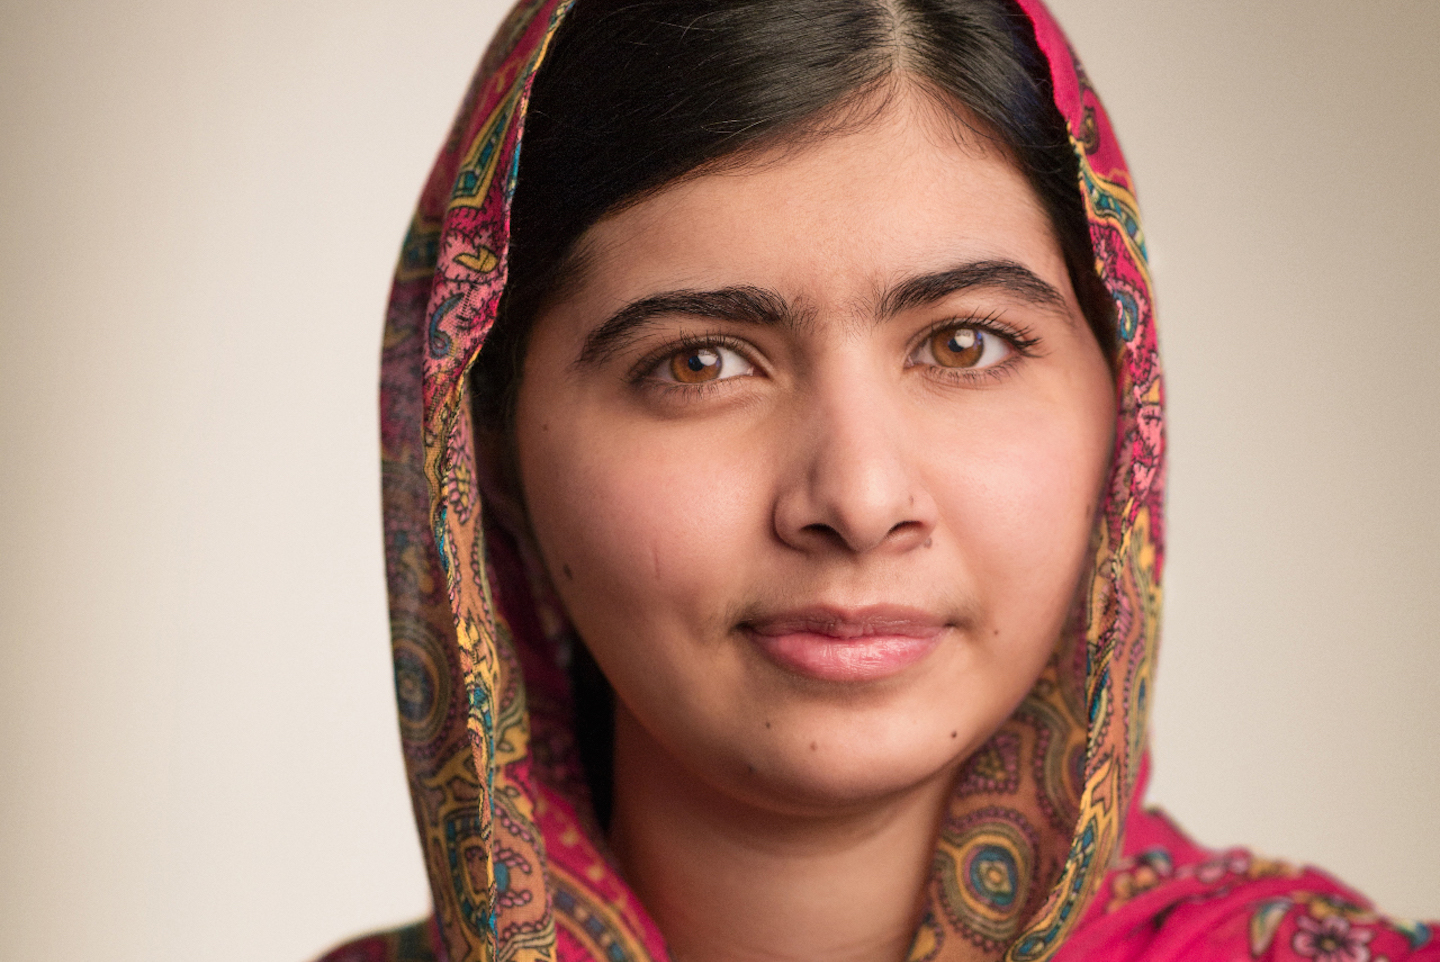 Malala Yousafzaï